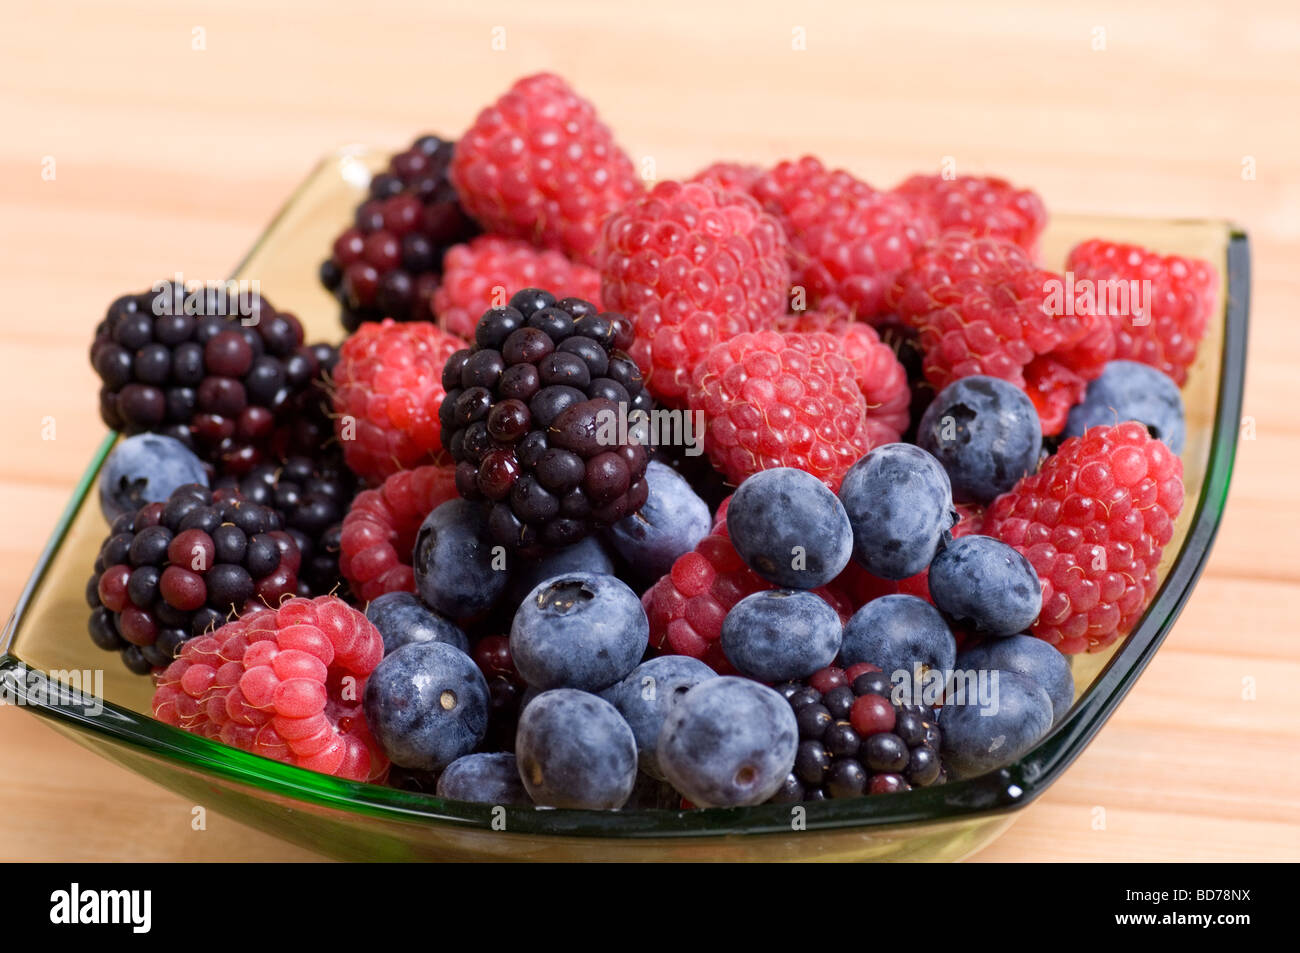 Dish of mixed berries Stock Photo